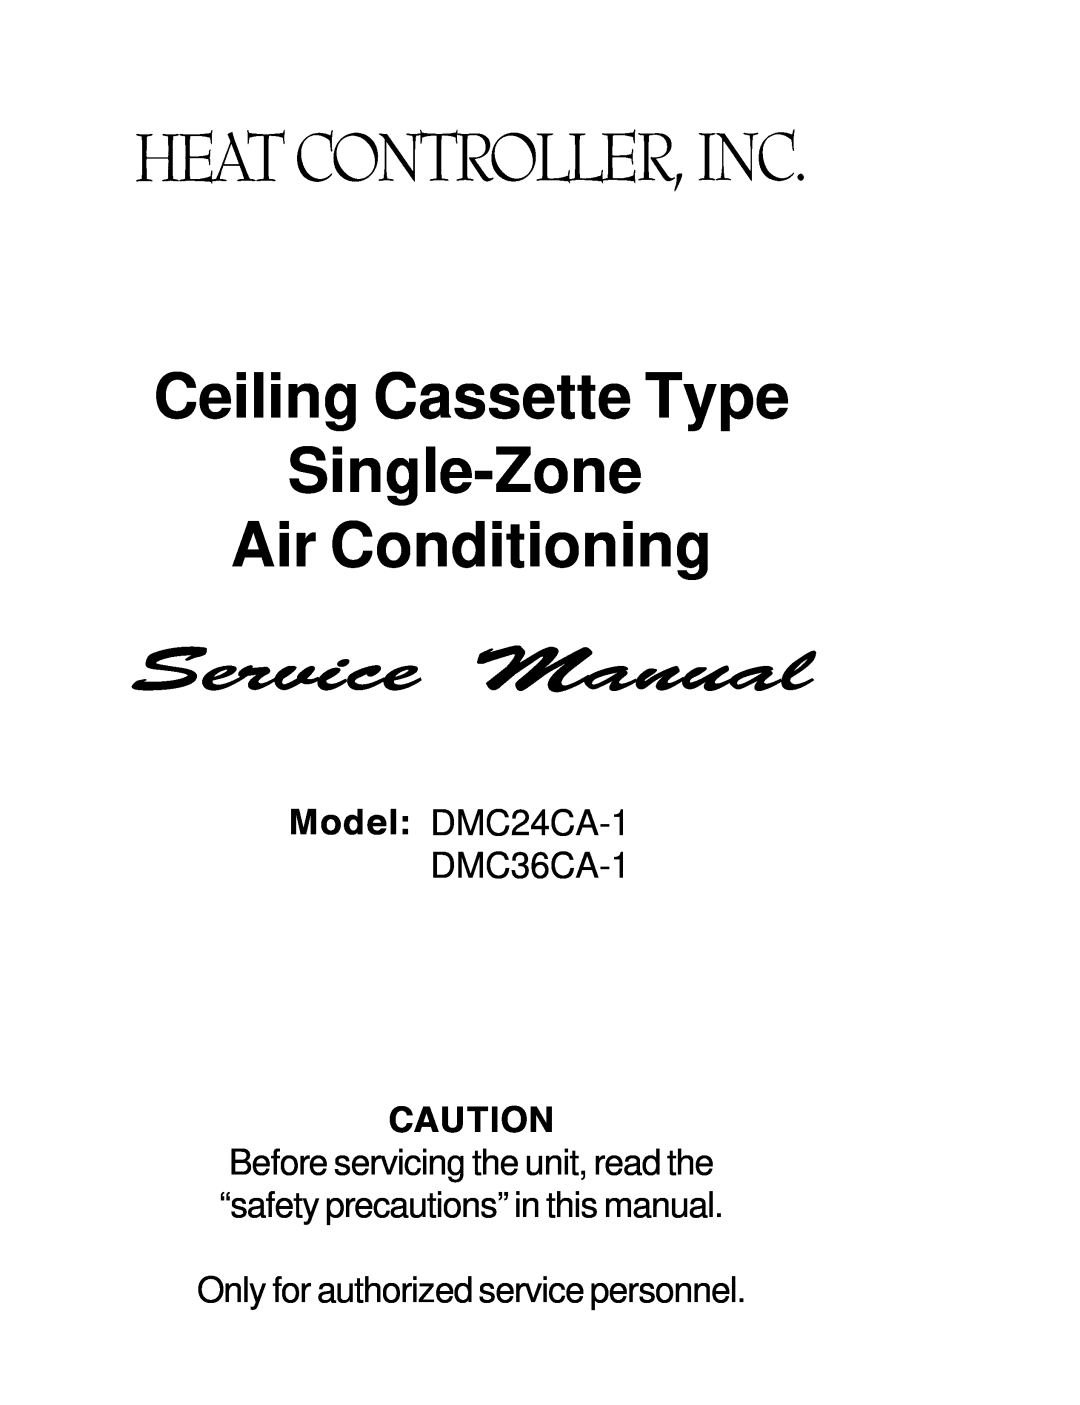 Heat Controller manual Ceiling Cassette Type Single-Zone, Air Conditioning, DMC24CA-1 DMC36CA-1 